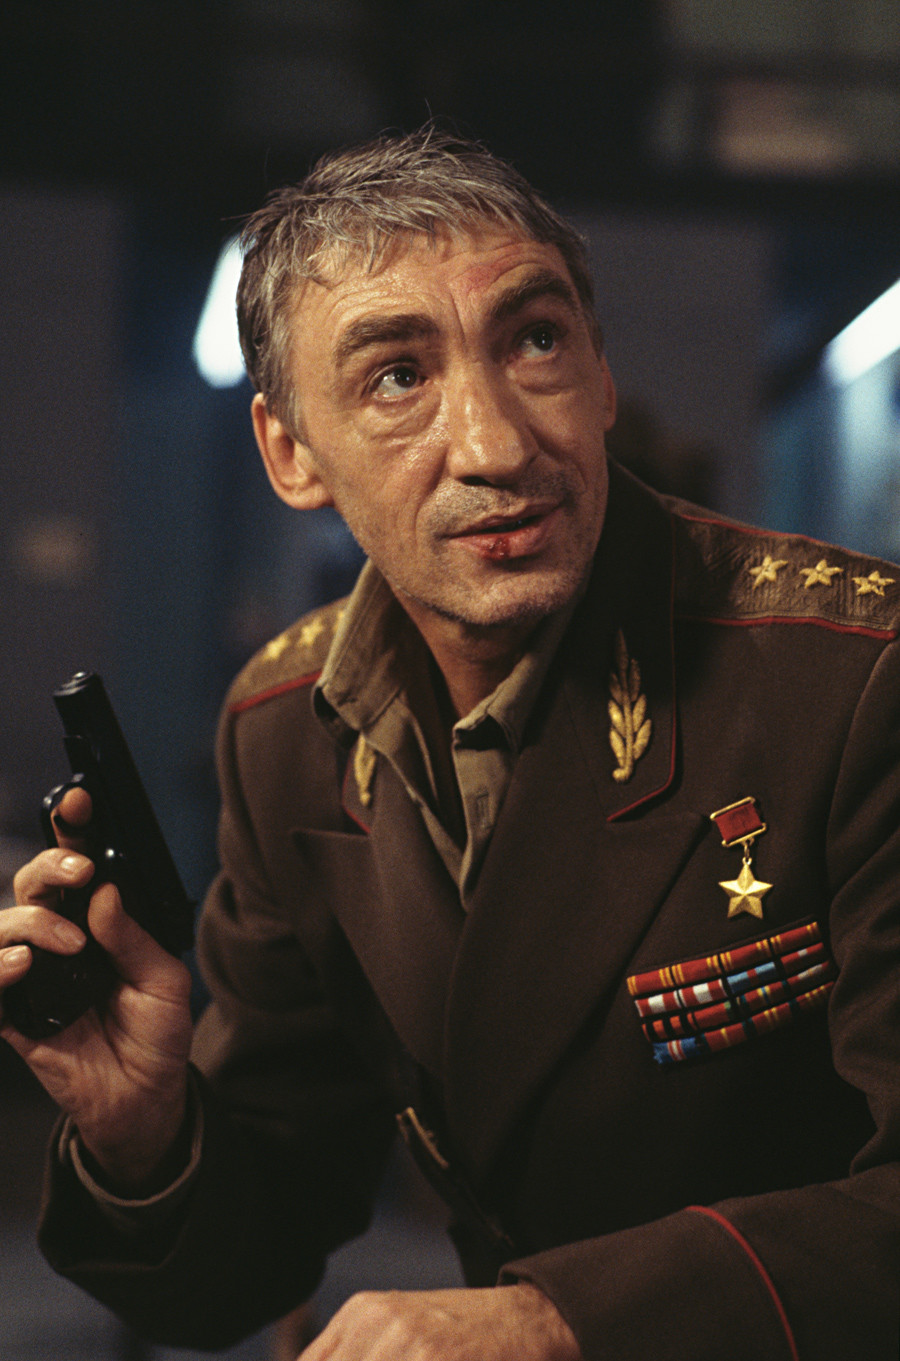 German actor Gottfried John stars as General Arkady Grigorovich Ourumov in the James Bond film 'GoldenEye', 1995.